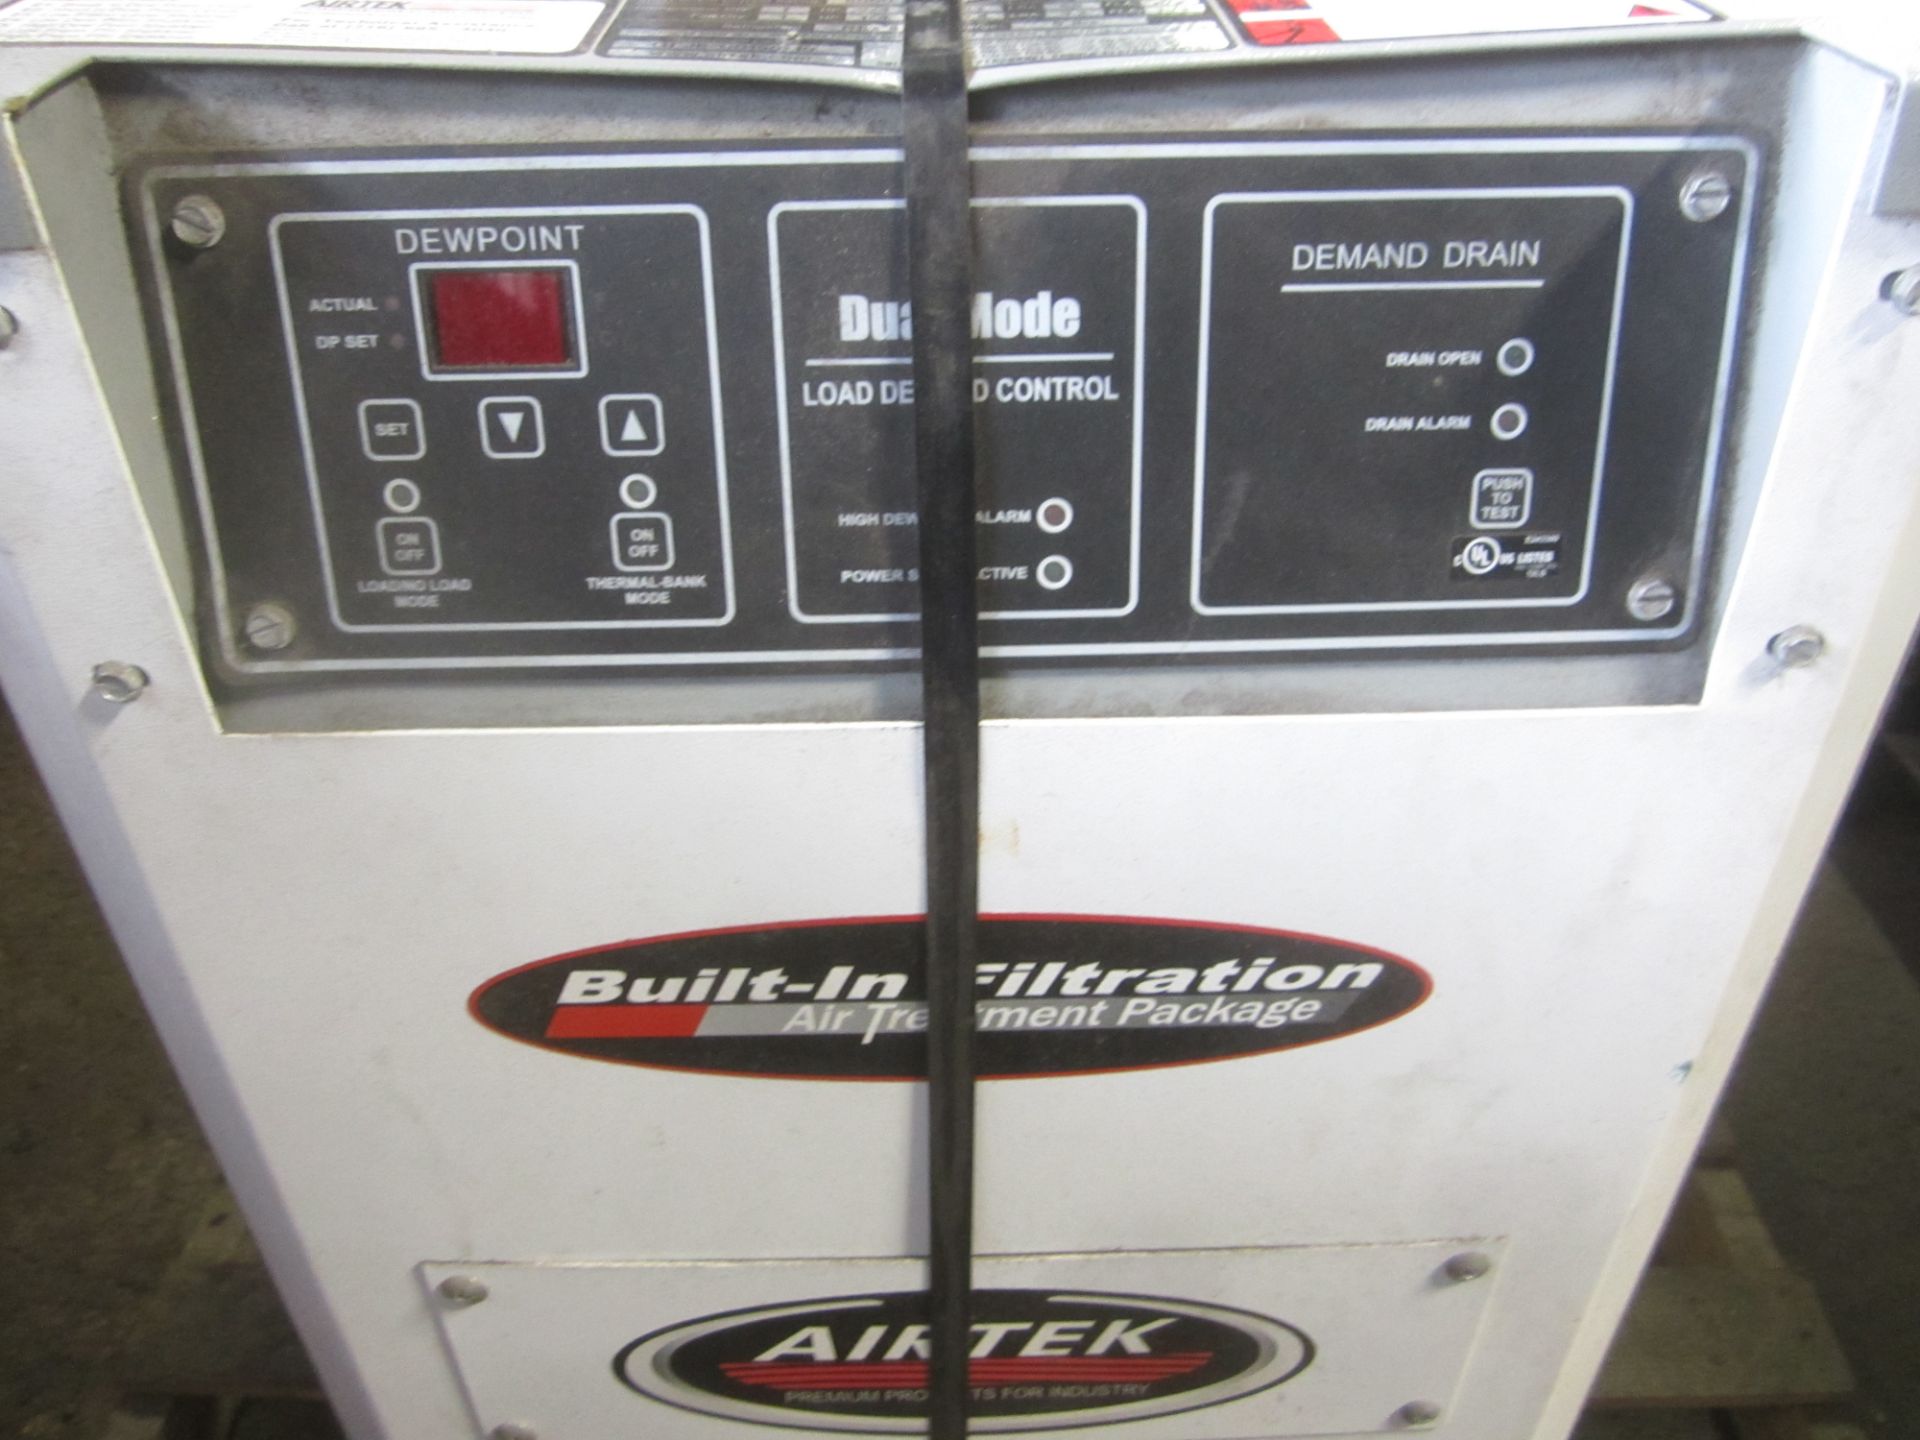 Airtek Model GCT165-A1 Refrigerated Air Dryer, s/n 1110-02783-D03, 165 SCFM, 200 PSIG Max. Working - Image 4 of 6